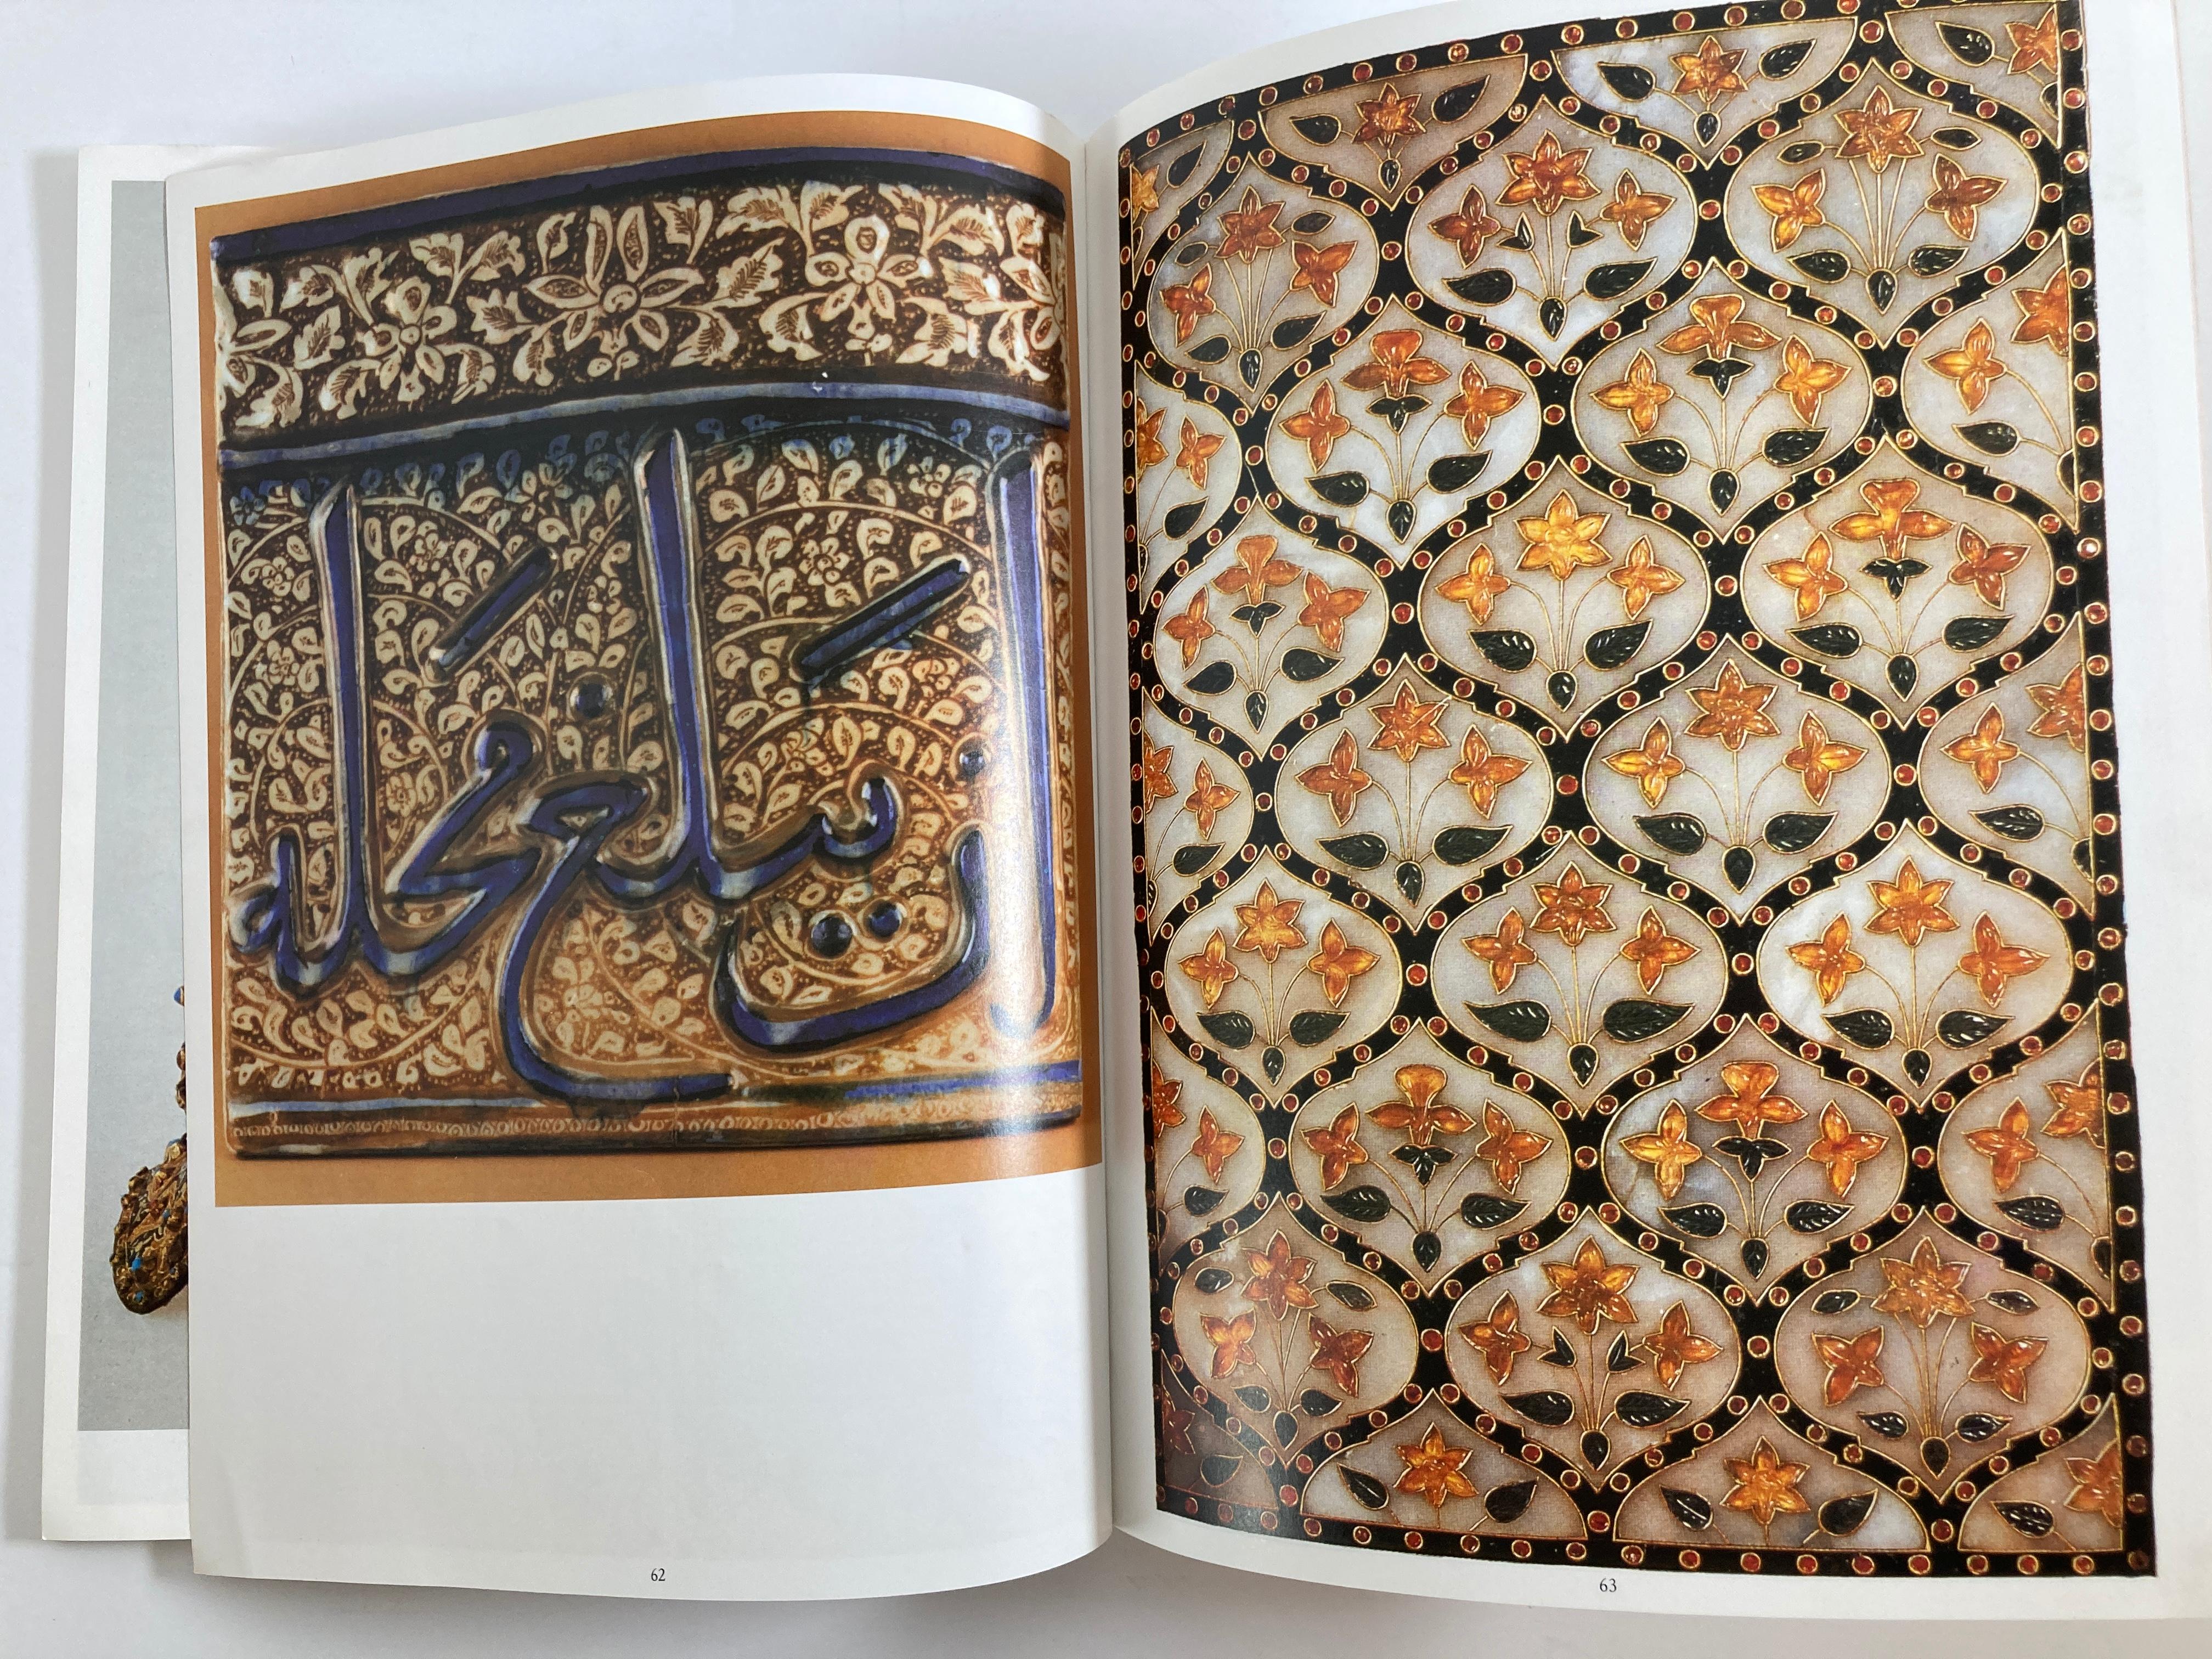 Les Trésors de l'Islam Book by Peter Schienerl Treasures of Islam 5